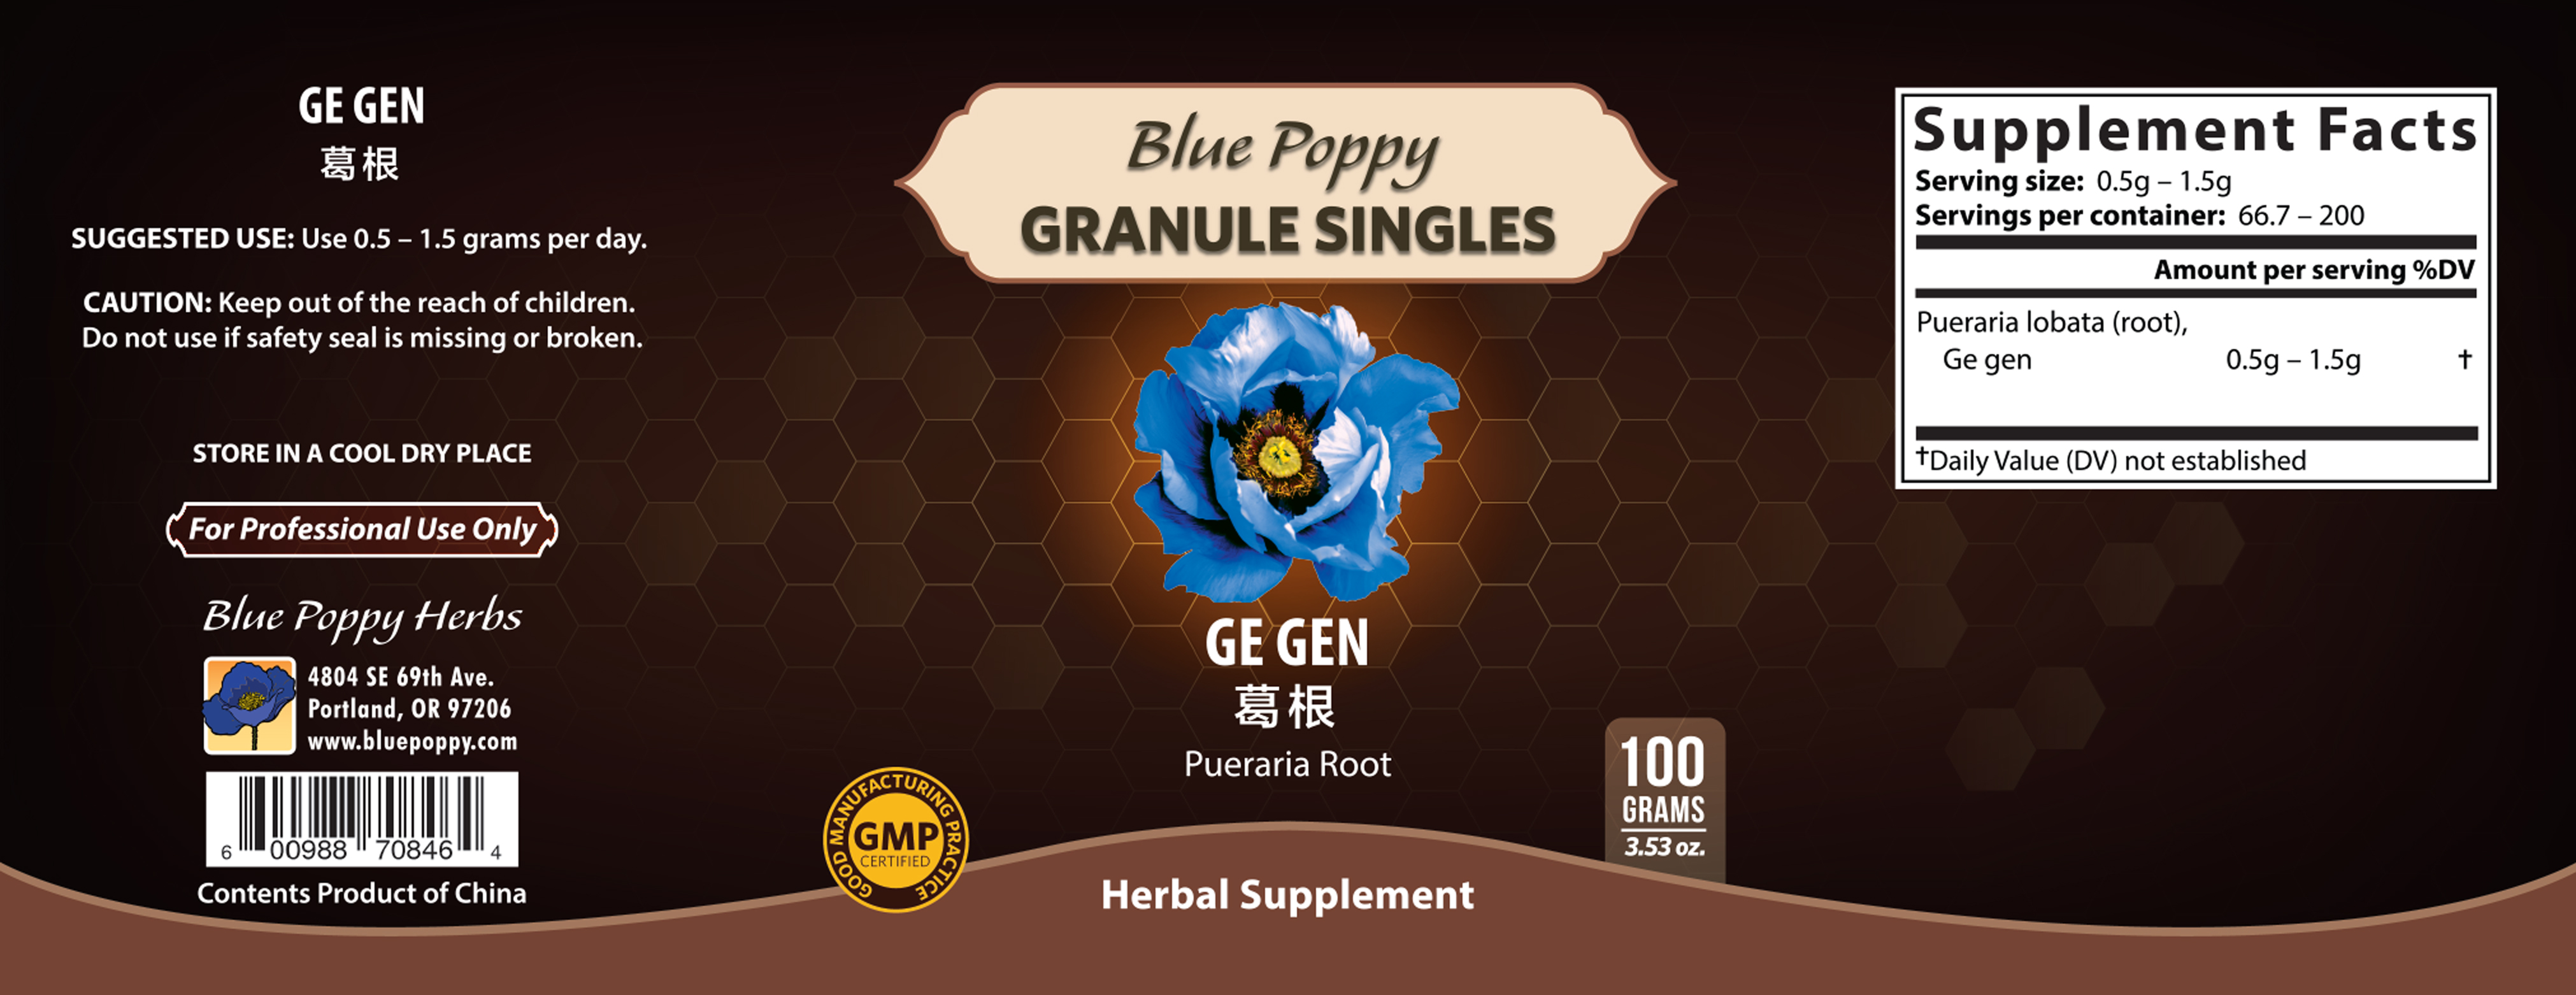 Ge Gen Granules